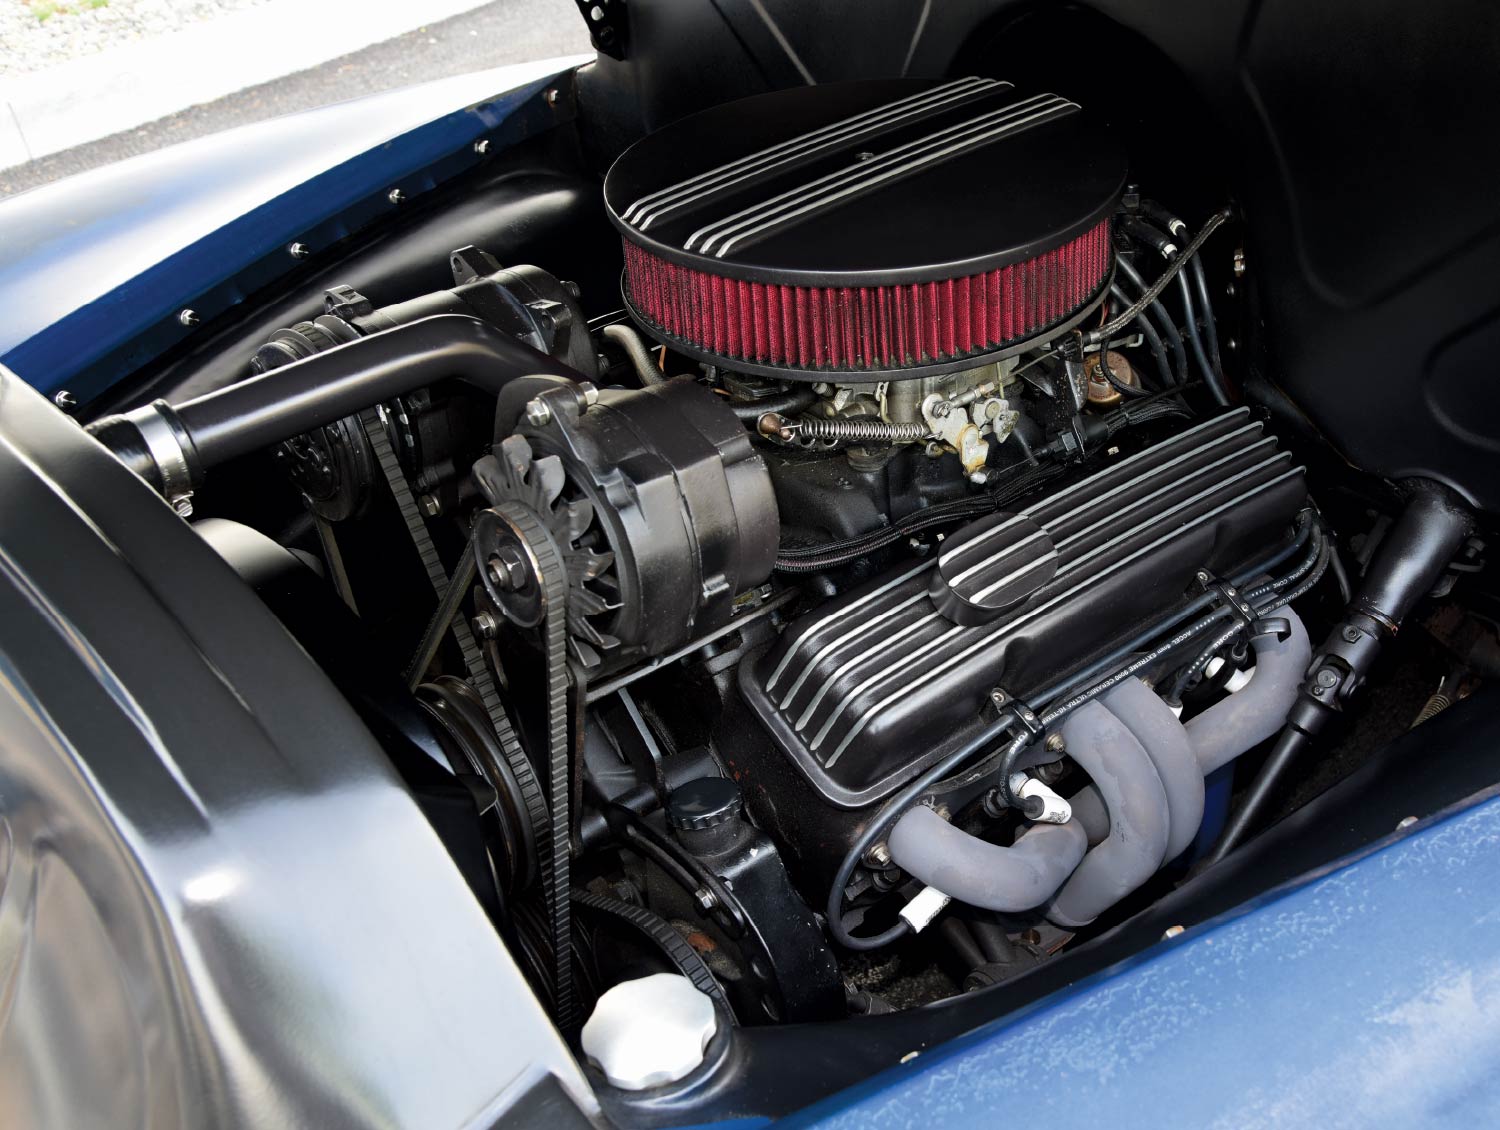 ’54 Chevy's engine